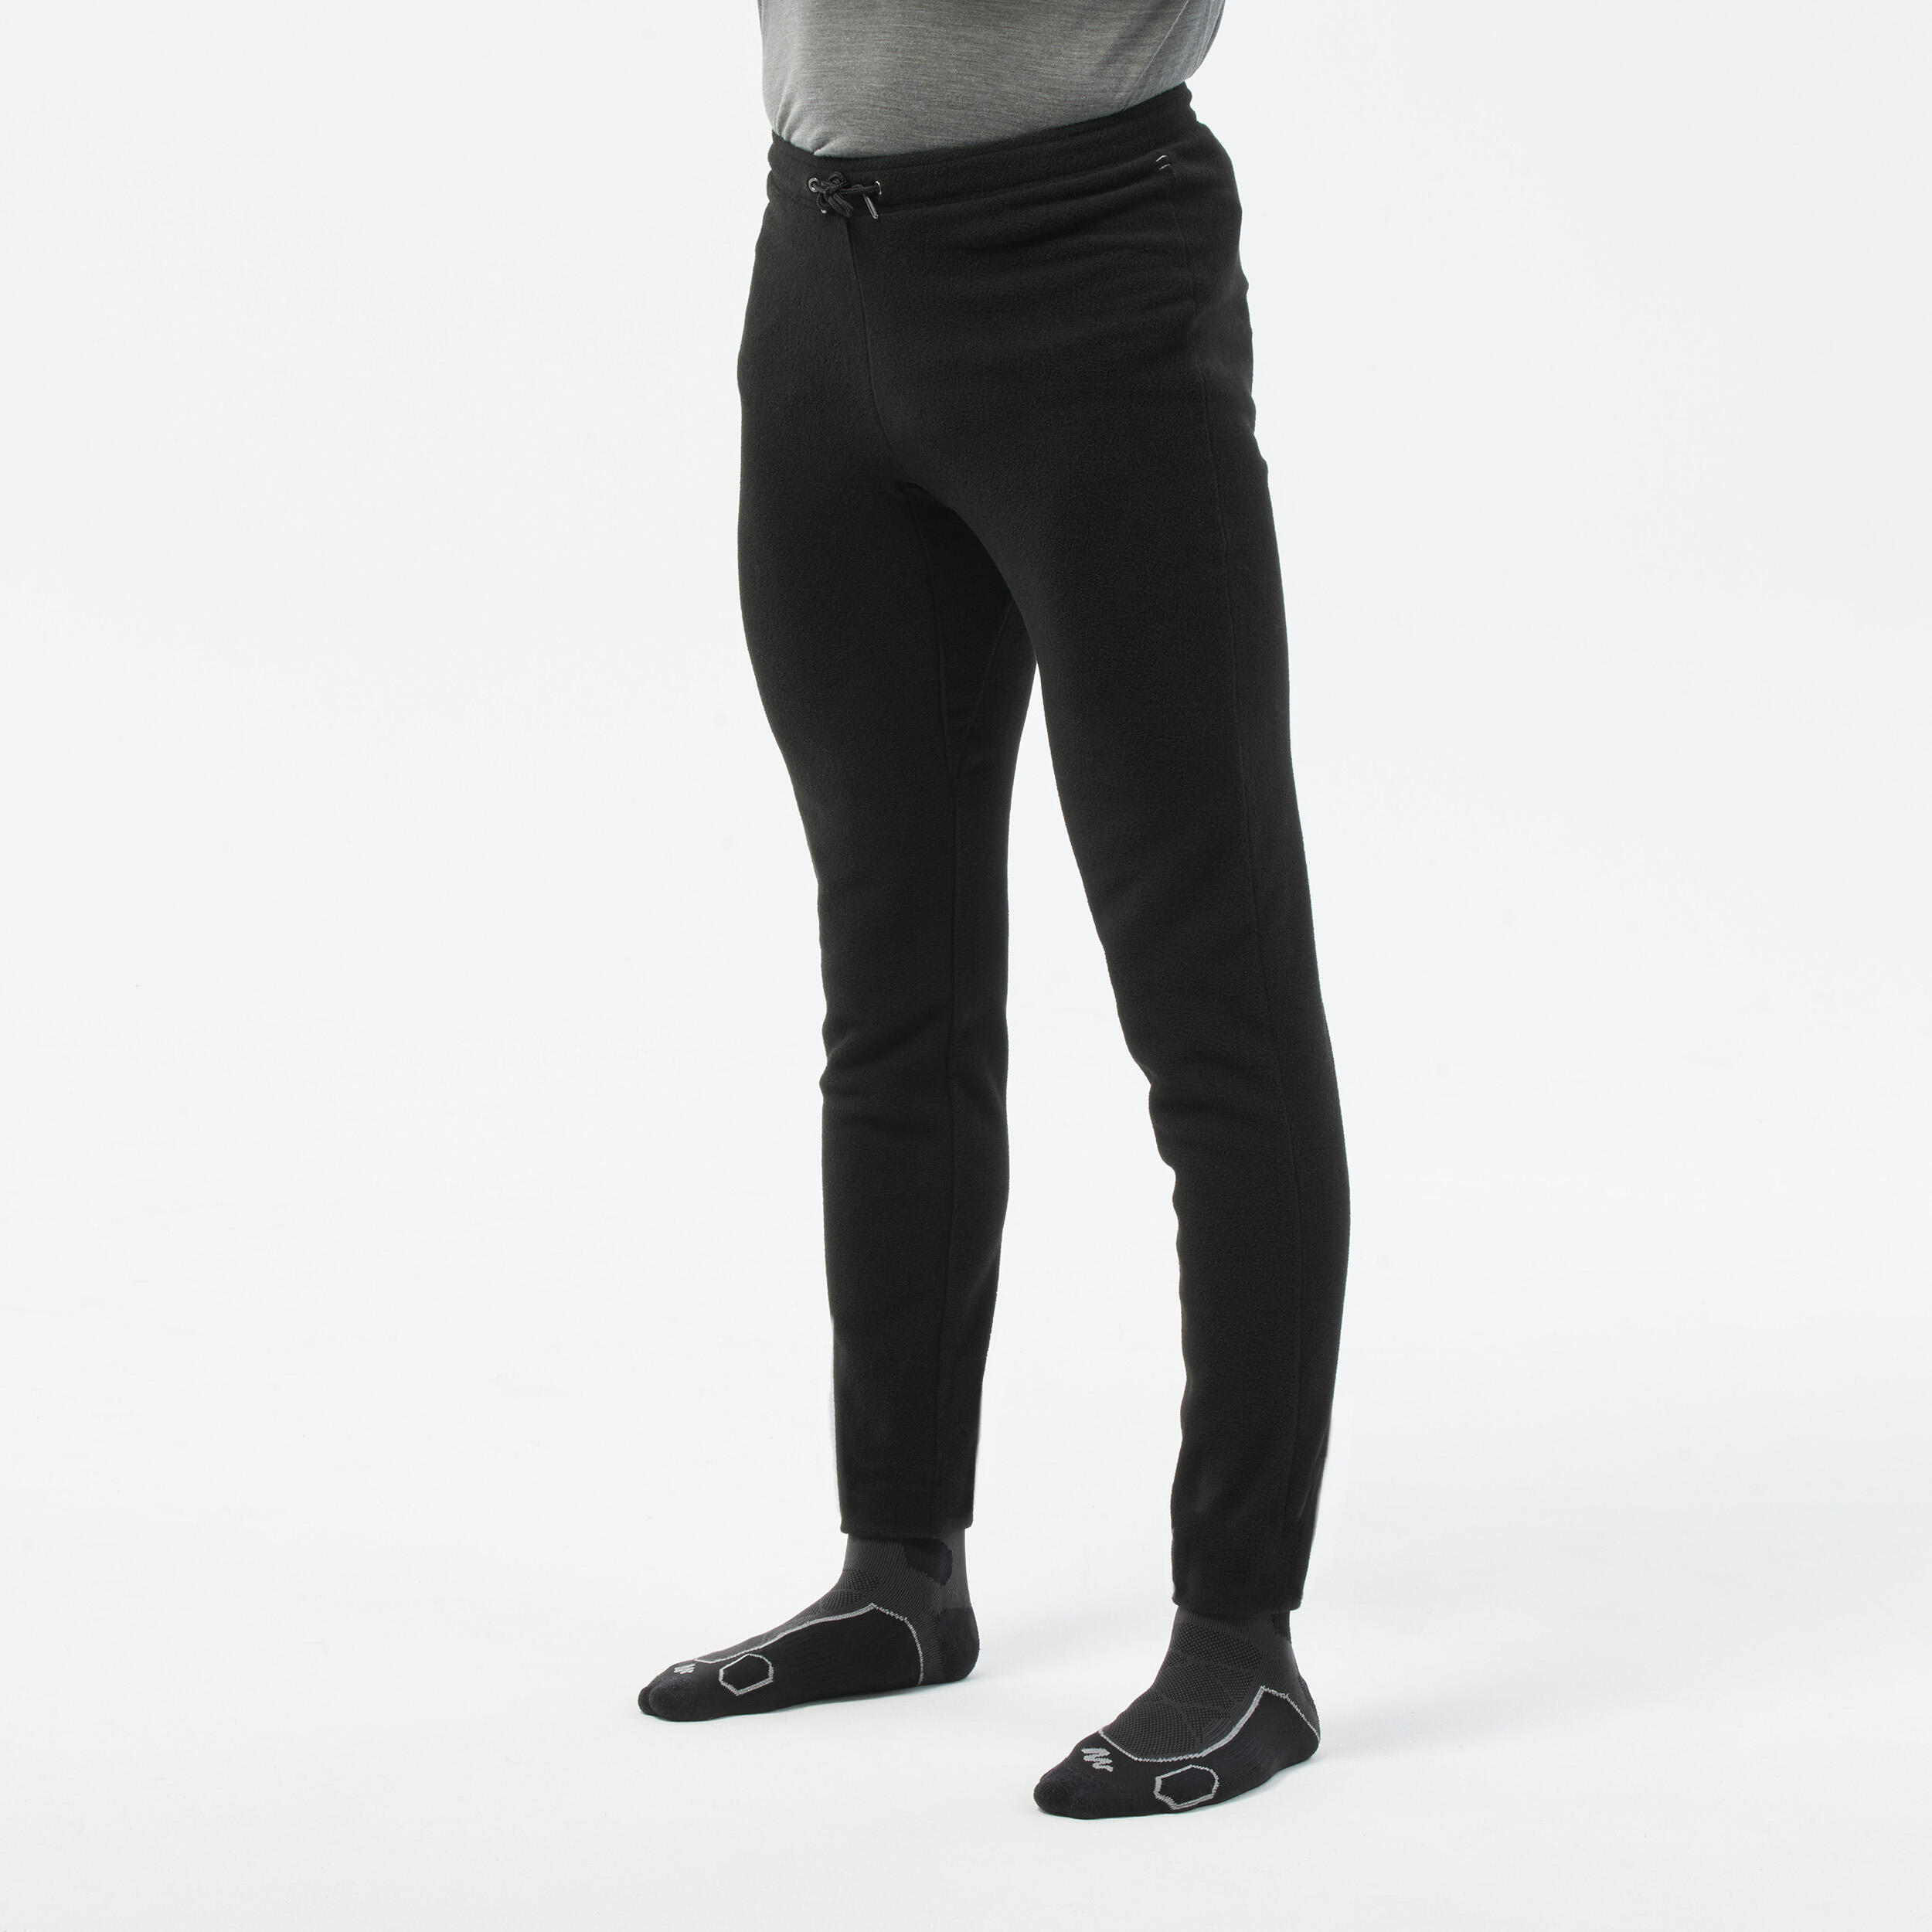 Men's Slim Fit Pants - 500 - Grey - Domyos - Decathlon